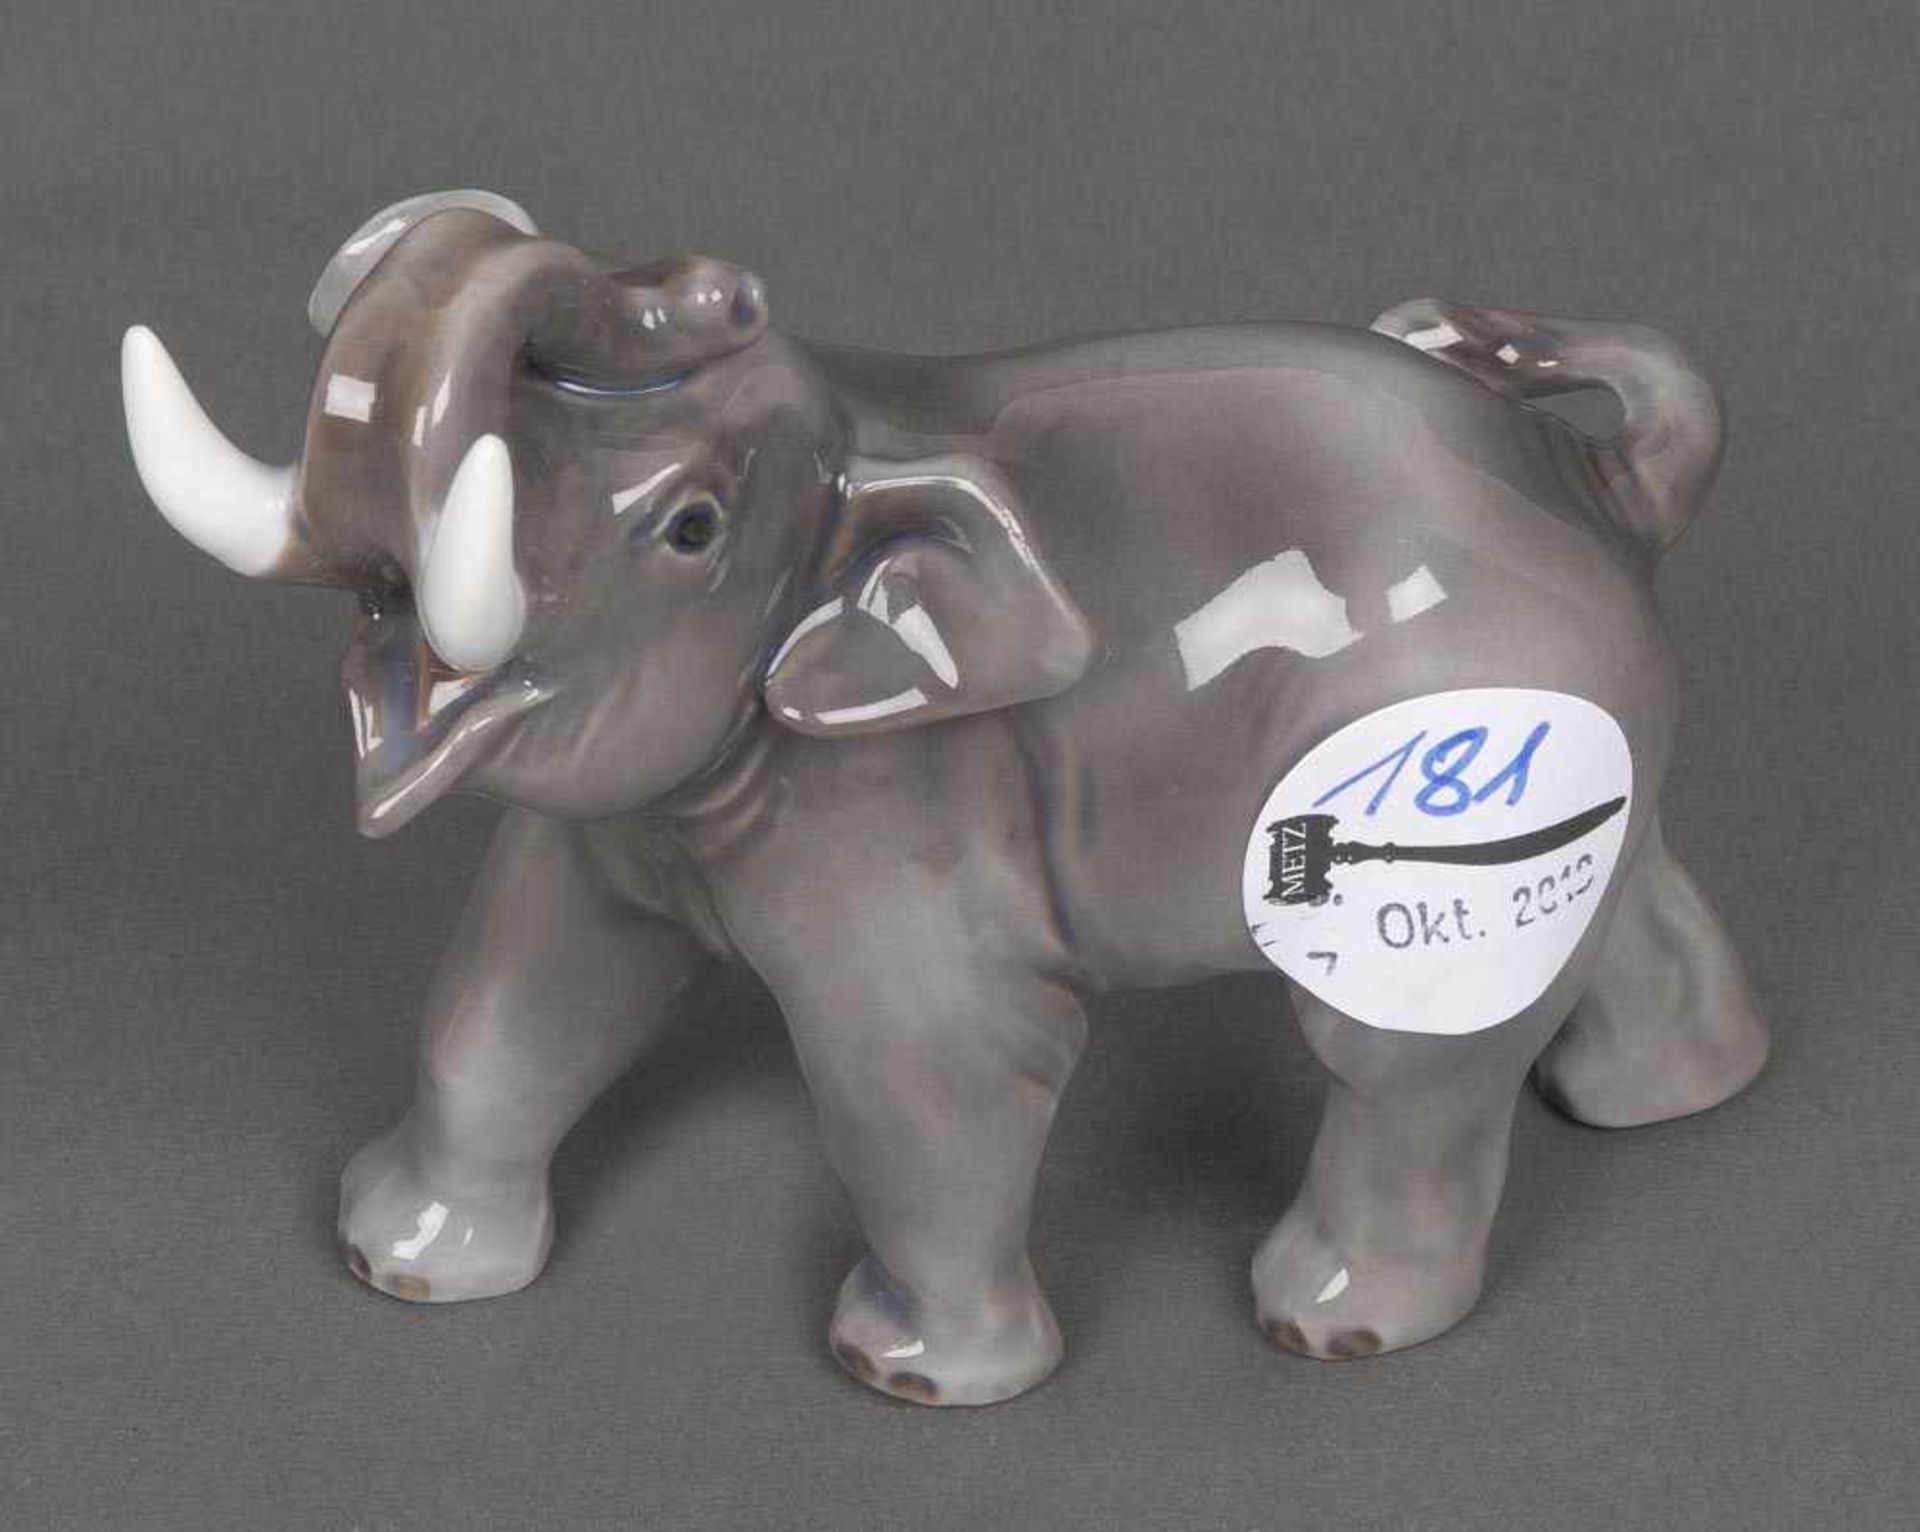 Elefant. Royal Copenhagen 20. Jh. Porzellan, bunt bemalt, H=11 cm.- - -25.00 % buyer's premium on